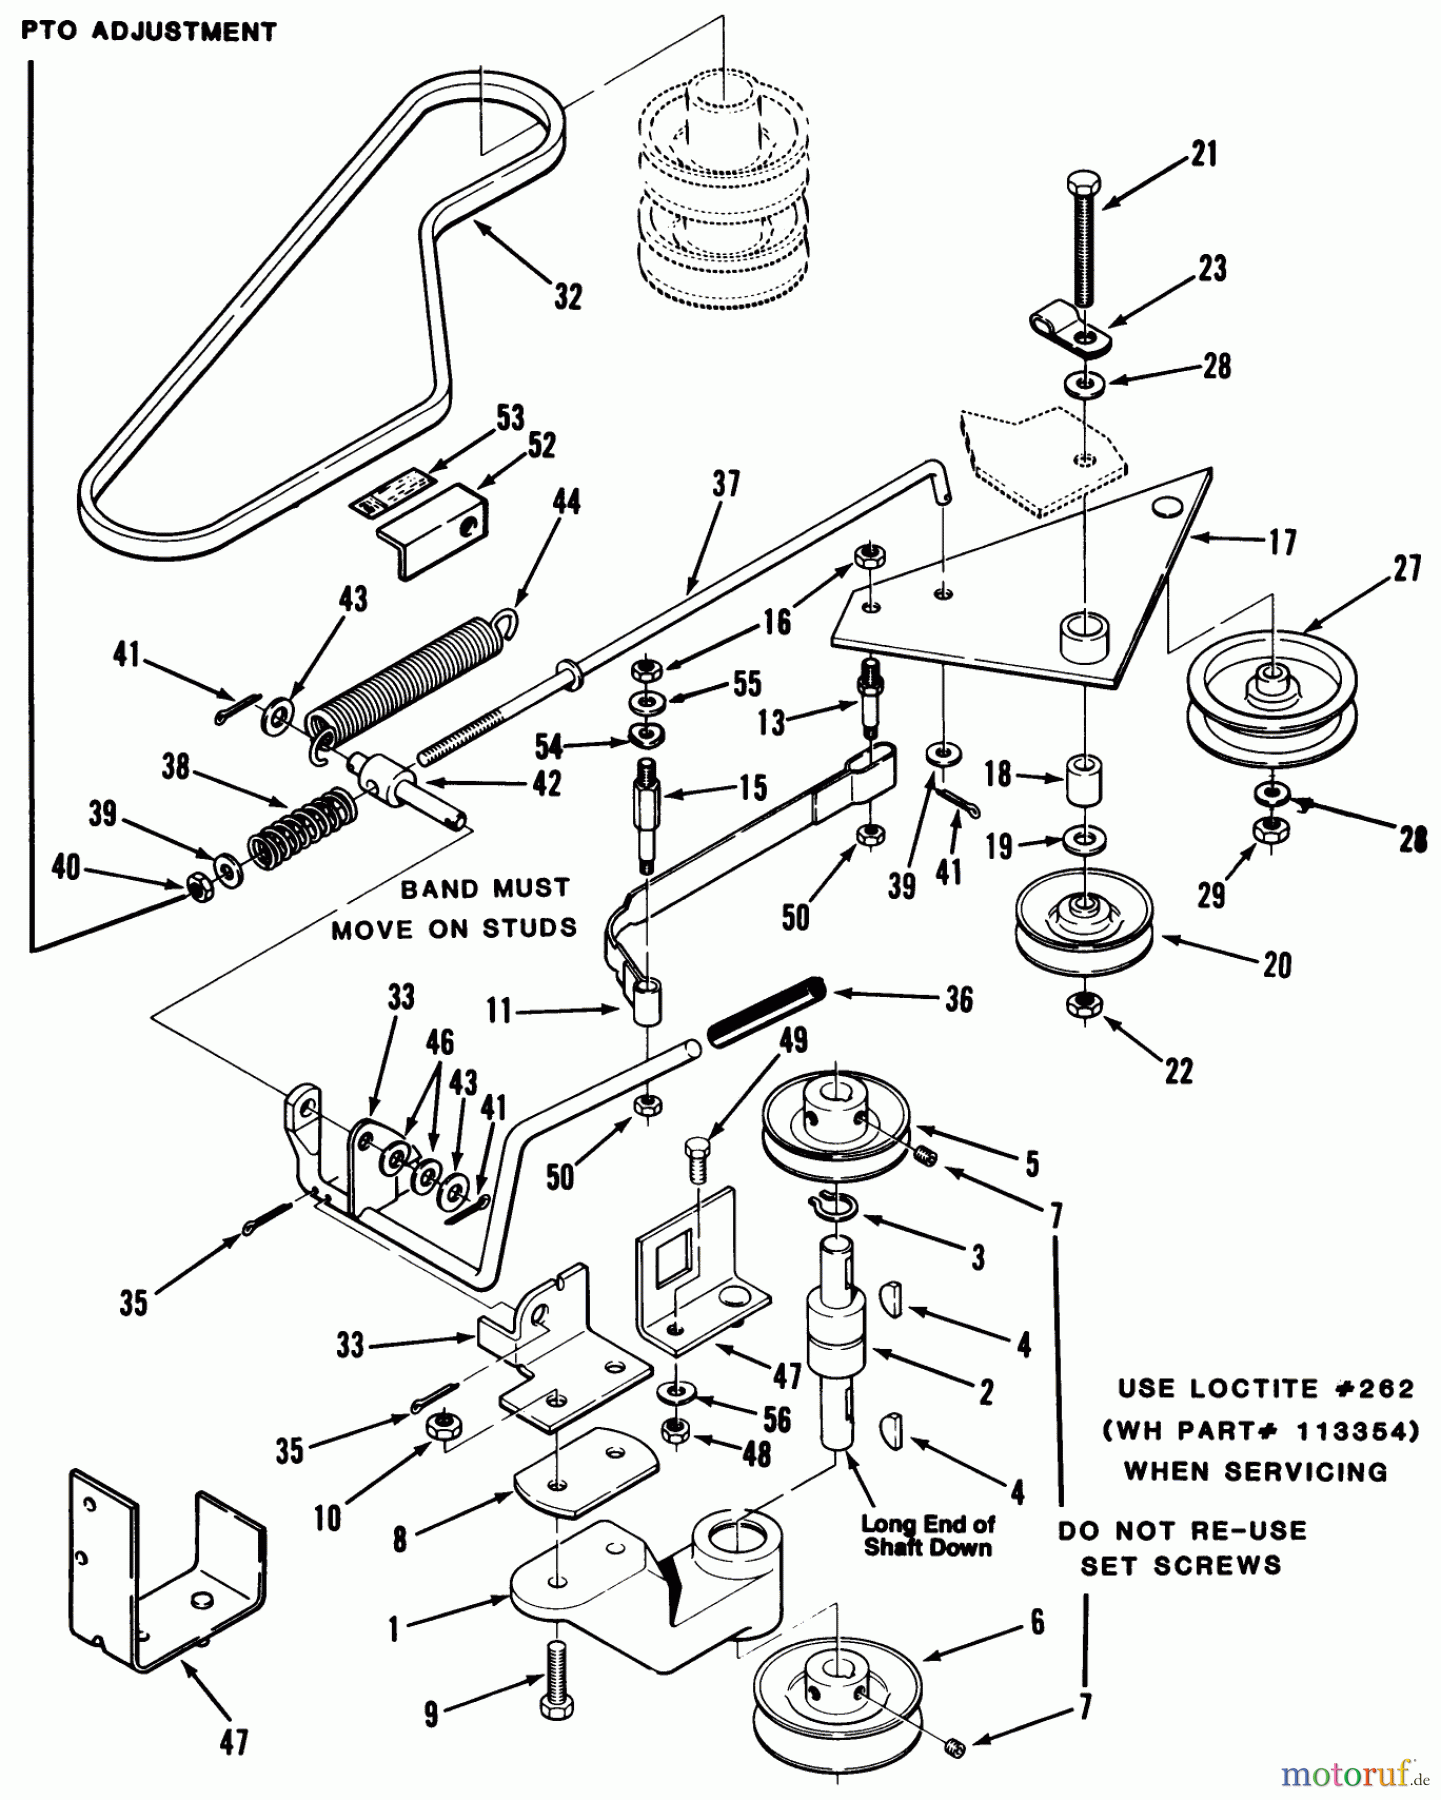  Toro Neu Mowers, Rear-Engine Rider B3-11B591 (111-5) - Toro 111-5 Rear Engine Rider, 1987 PTO CLUTCH, PULLEYS, AND CONTROLS